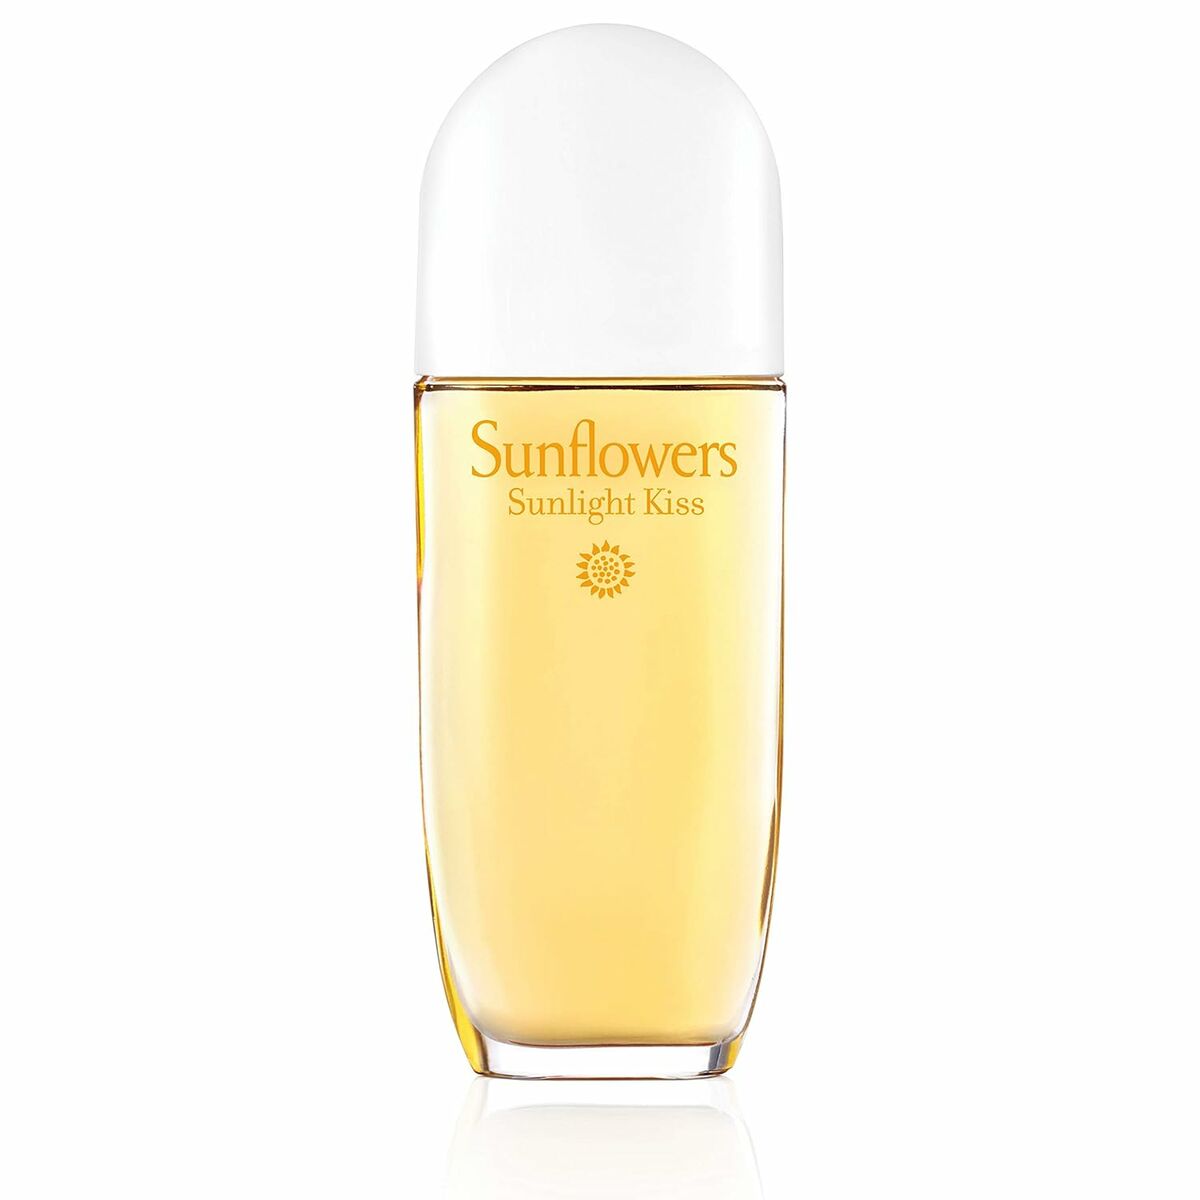 Damesparfum Elizabeth Arden Sunflowers Sunlight Kiss EDT 100 ml